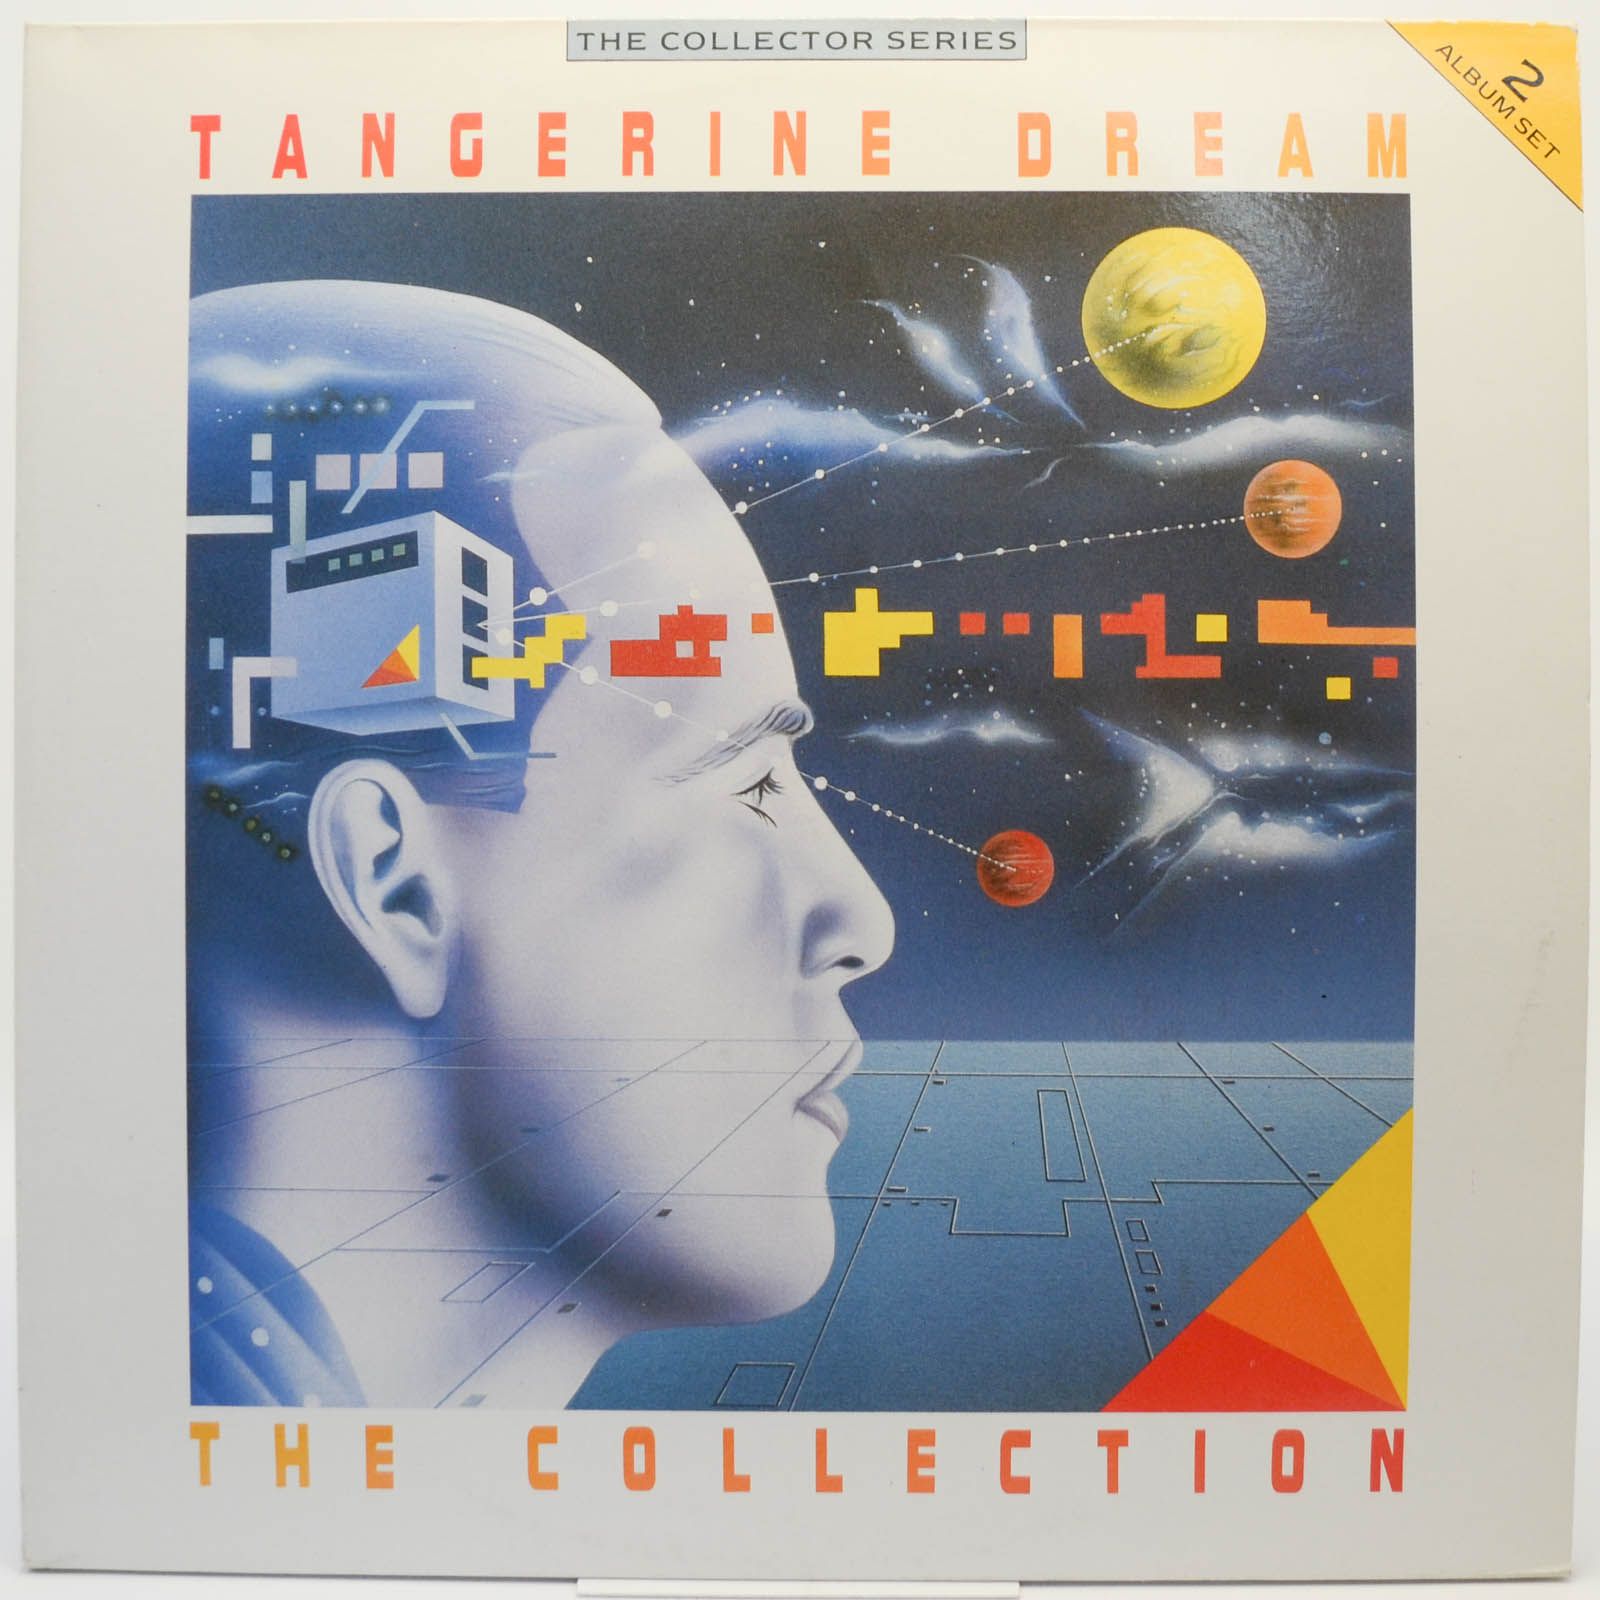 Tangerine Dream — The Collection (2LP, UK), 1987